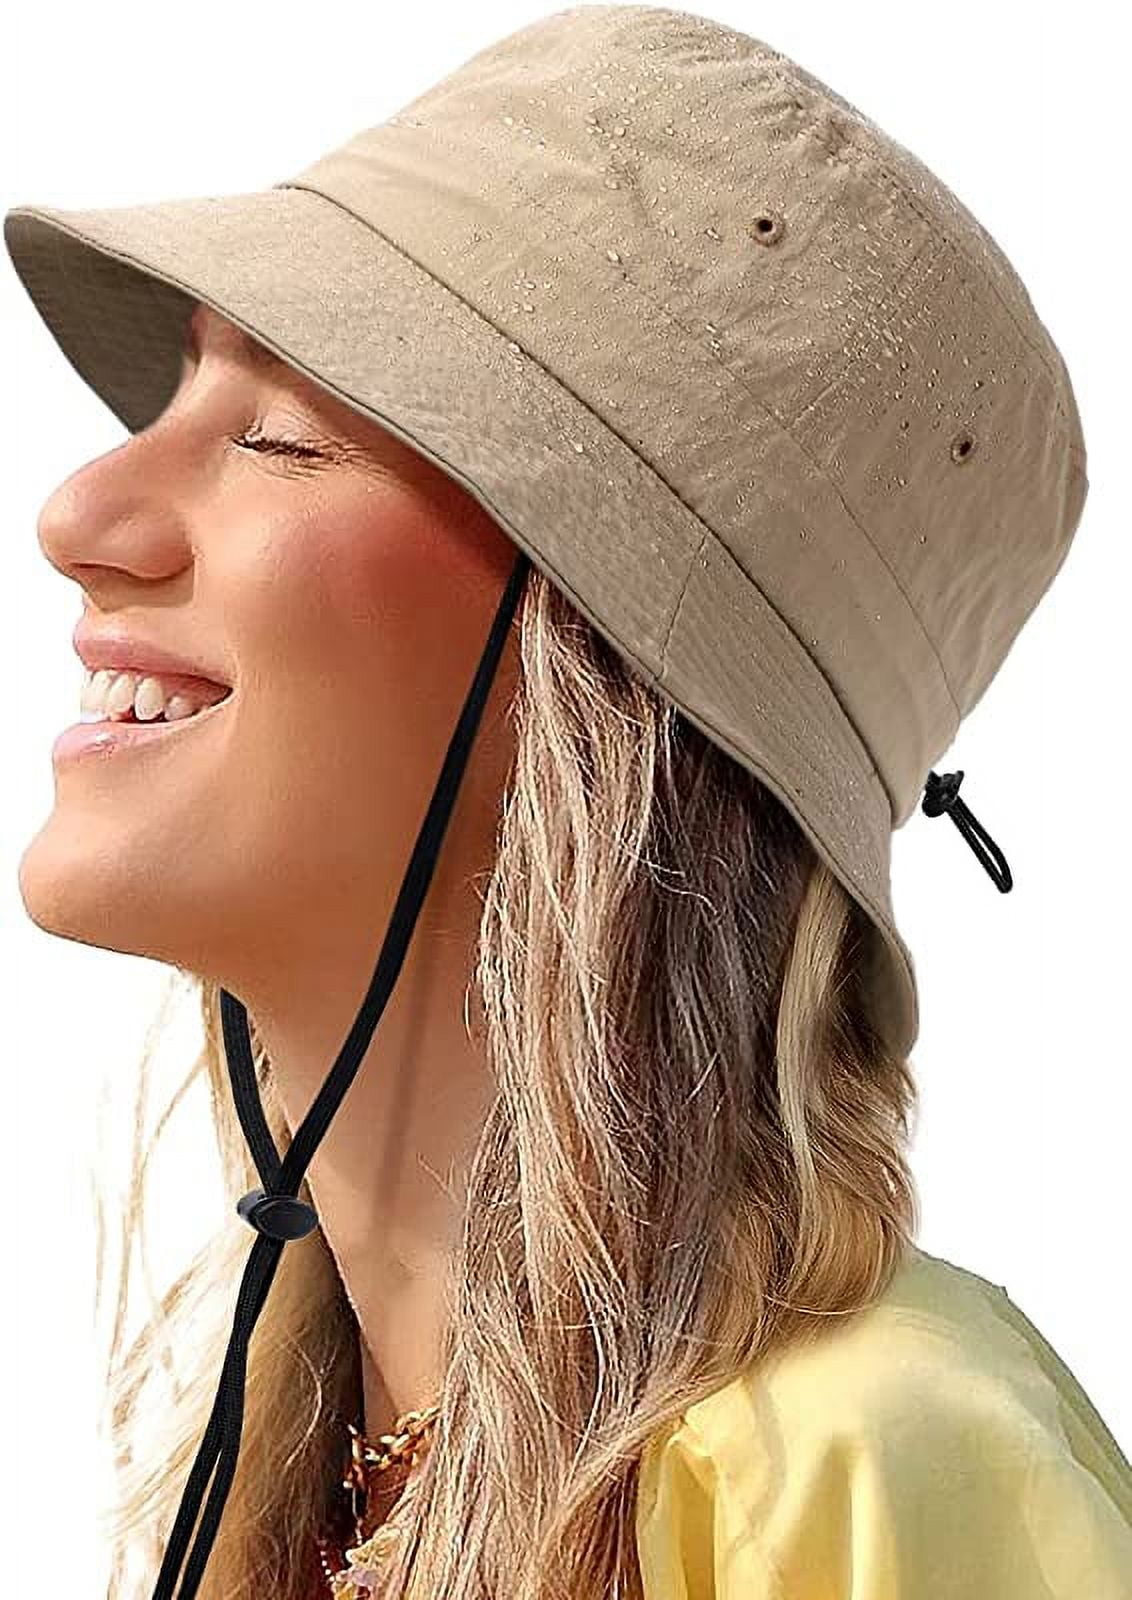 Trendy Apparel Shop UPF 50+ Soft Paper Braid Tween Sun Bucket Hat